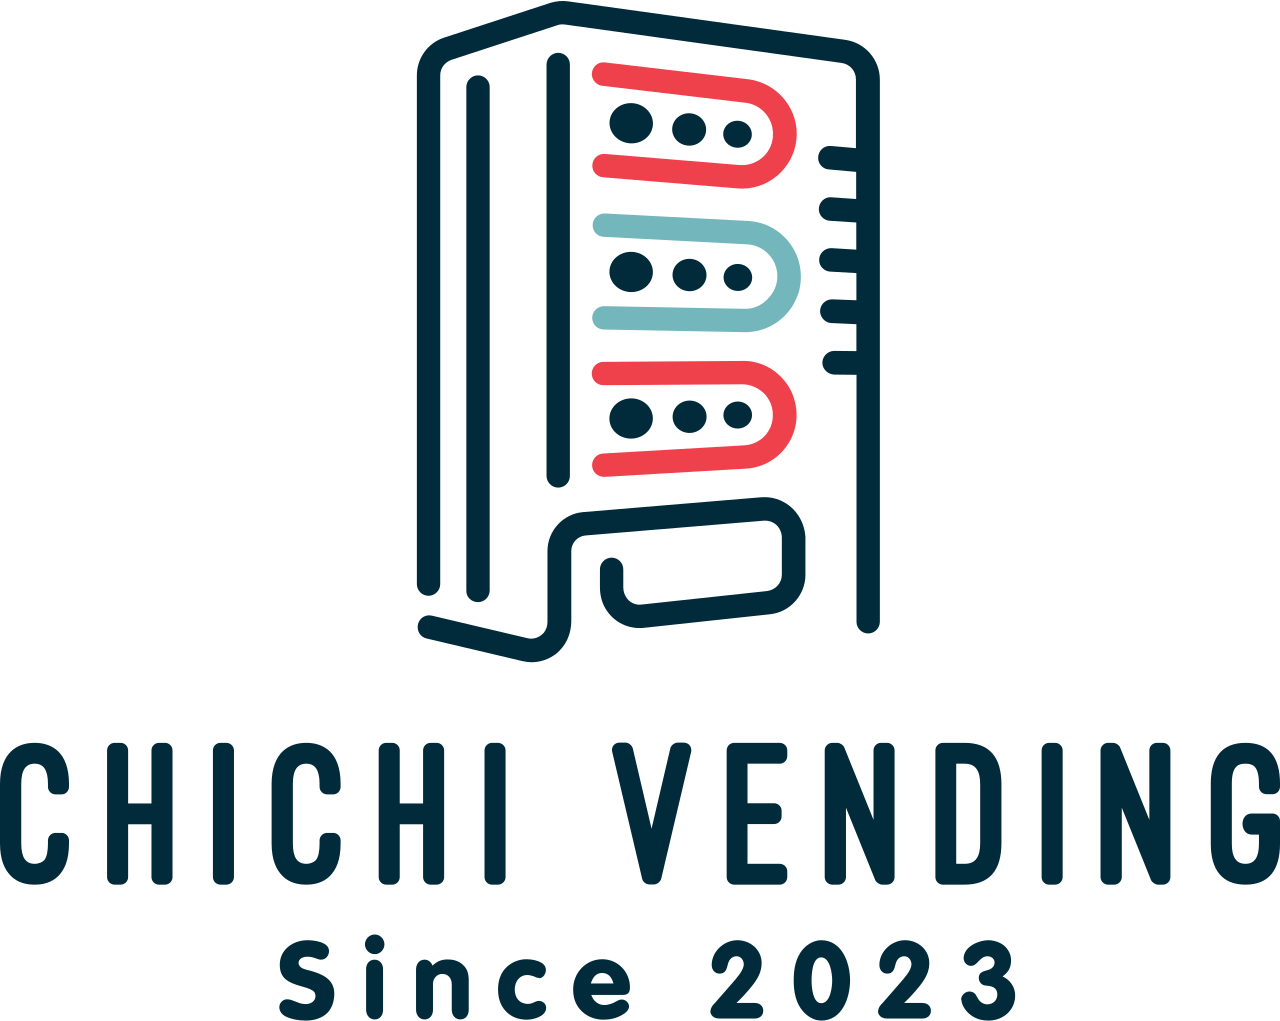 ChiChi Vending's web page